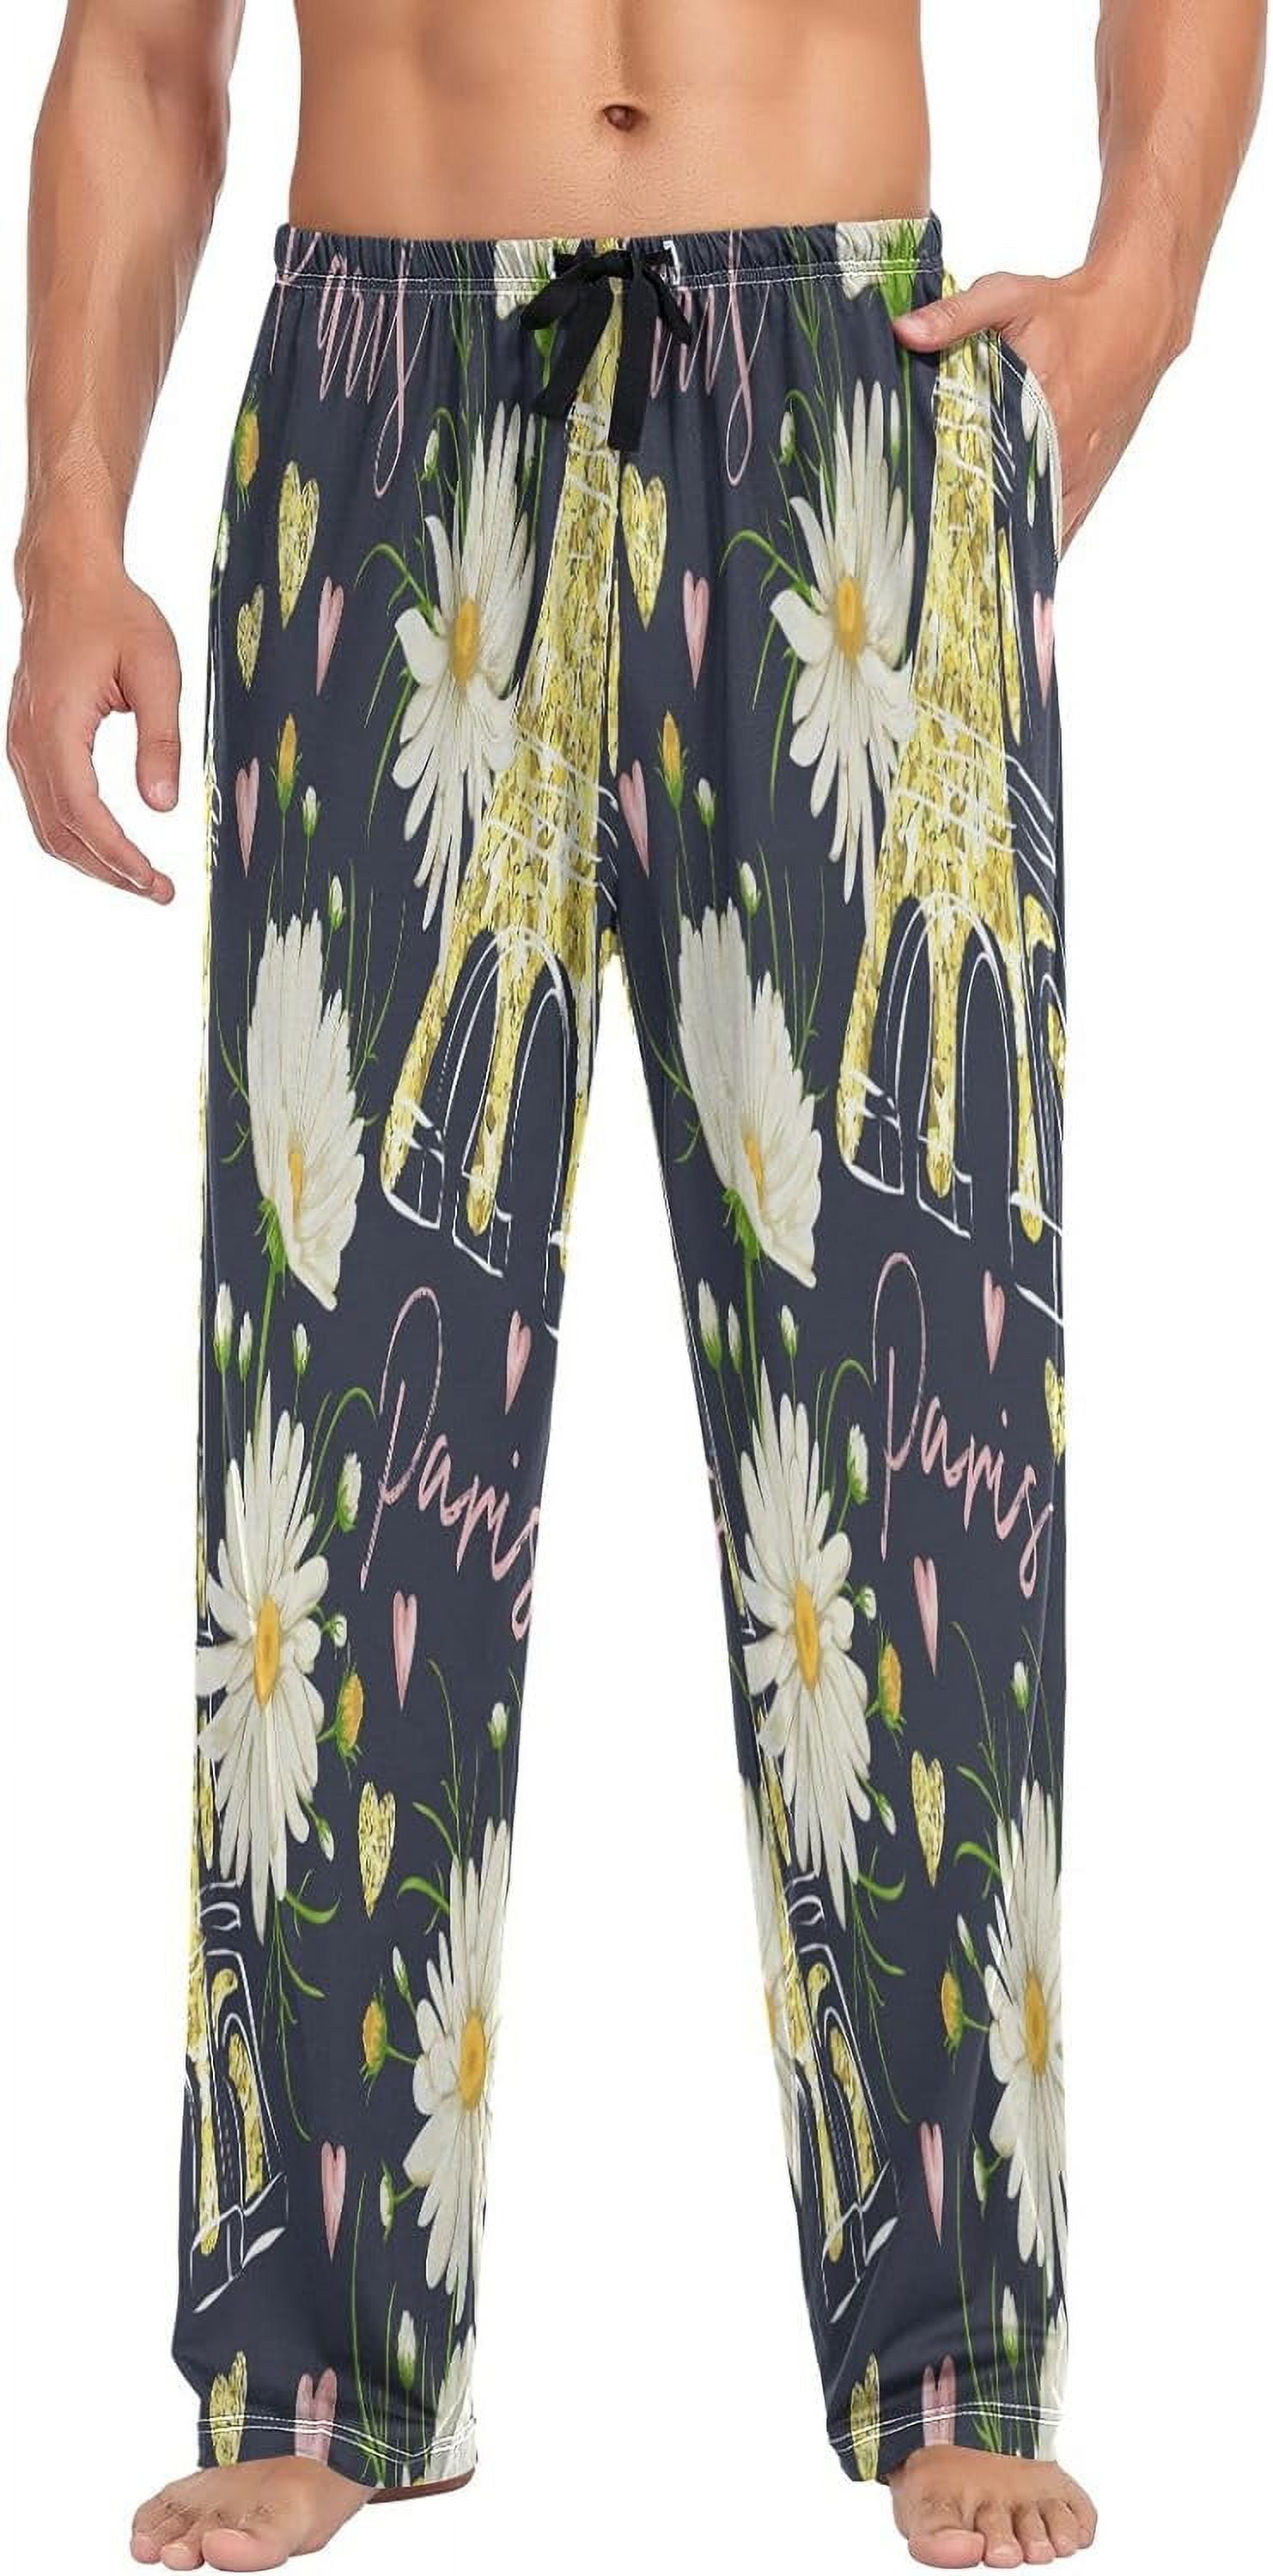 Paris Flower Men's Pajama Pants Lightweight Sleepwear Bottom Lounge ...